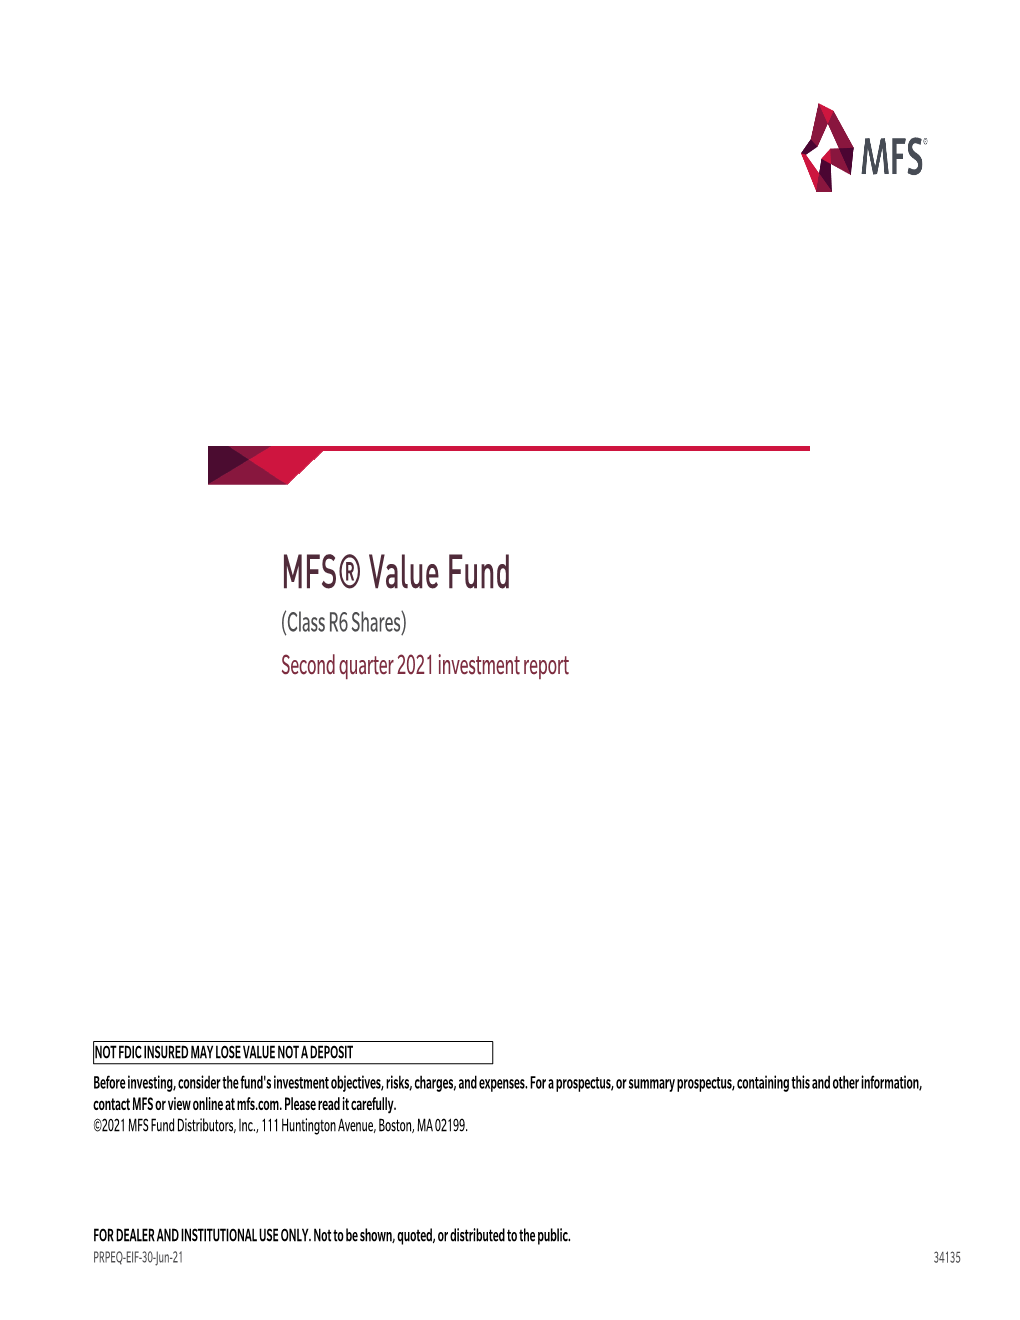 MFS® Value Fund (Class R6 Shares) Second Quarter 2021 Investment Report